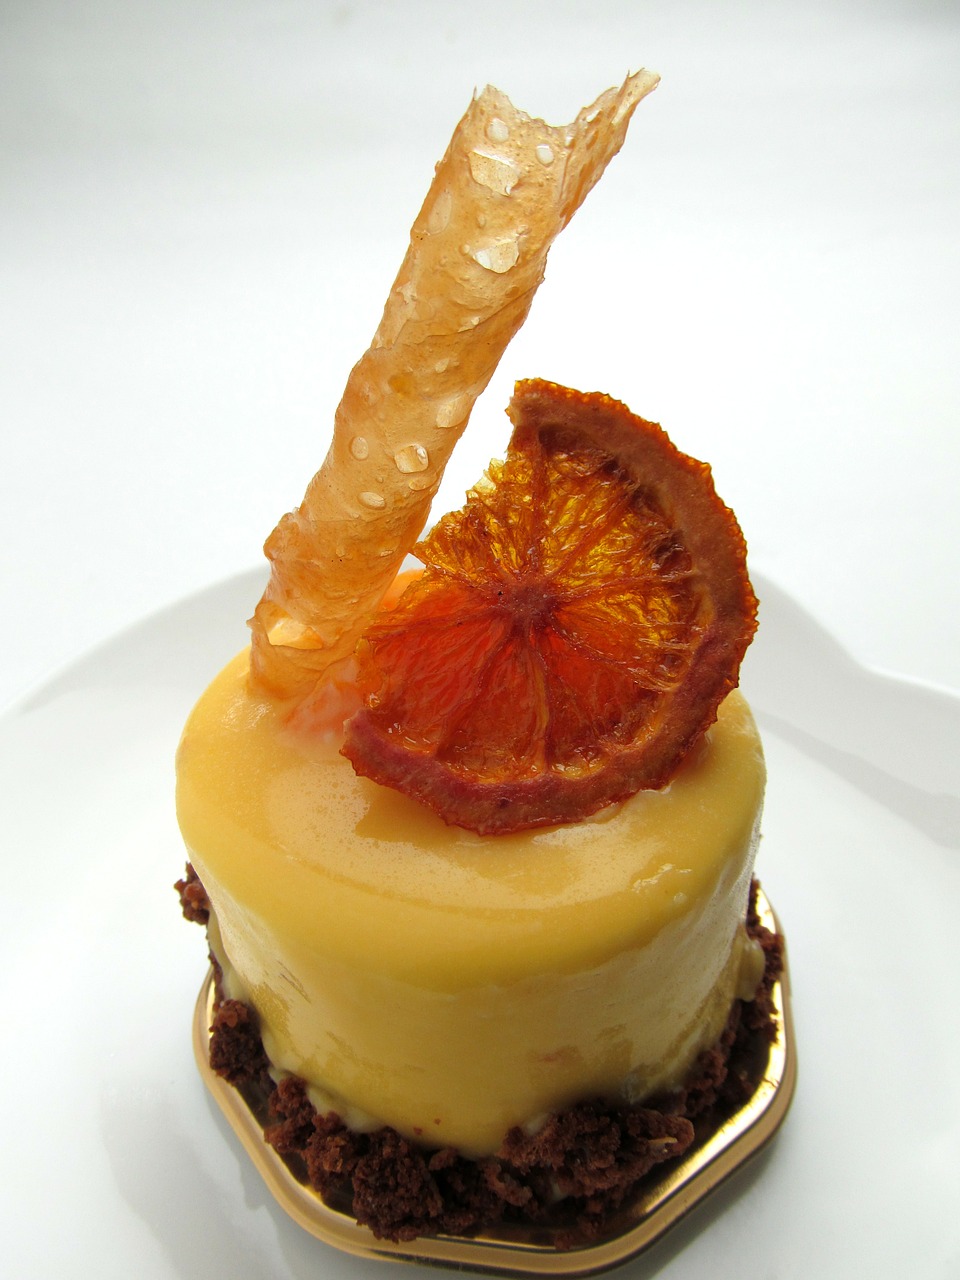 Orange and Almond Cake With Mascarpone Cream (flourless)